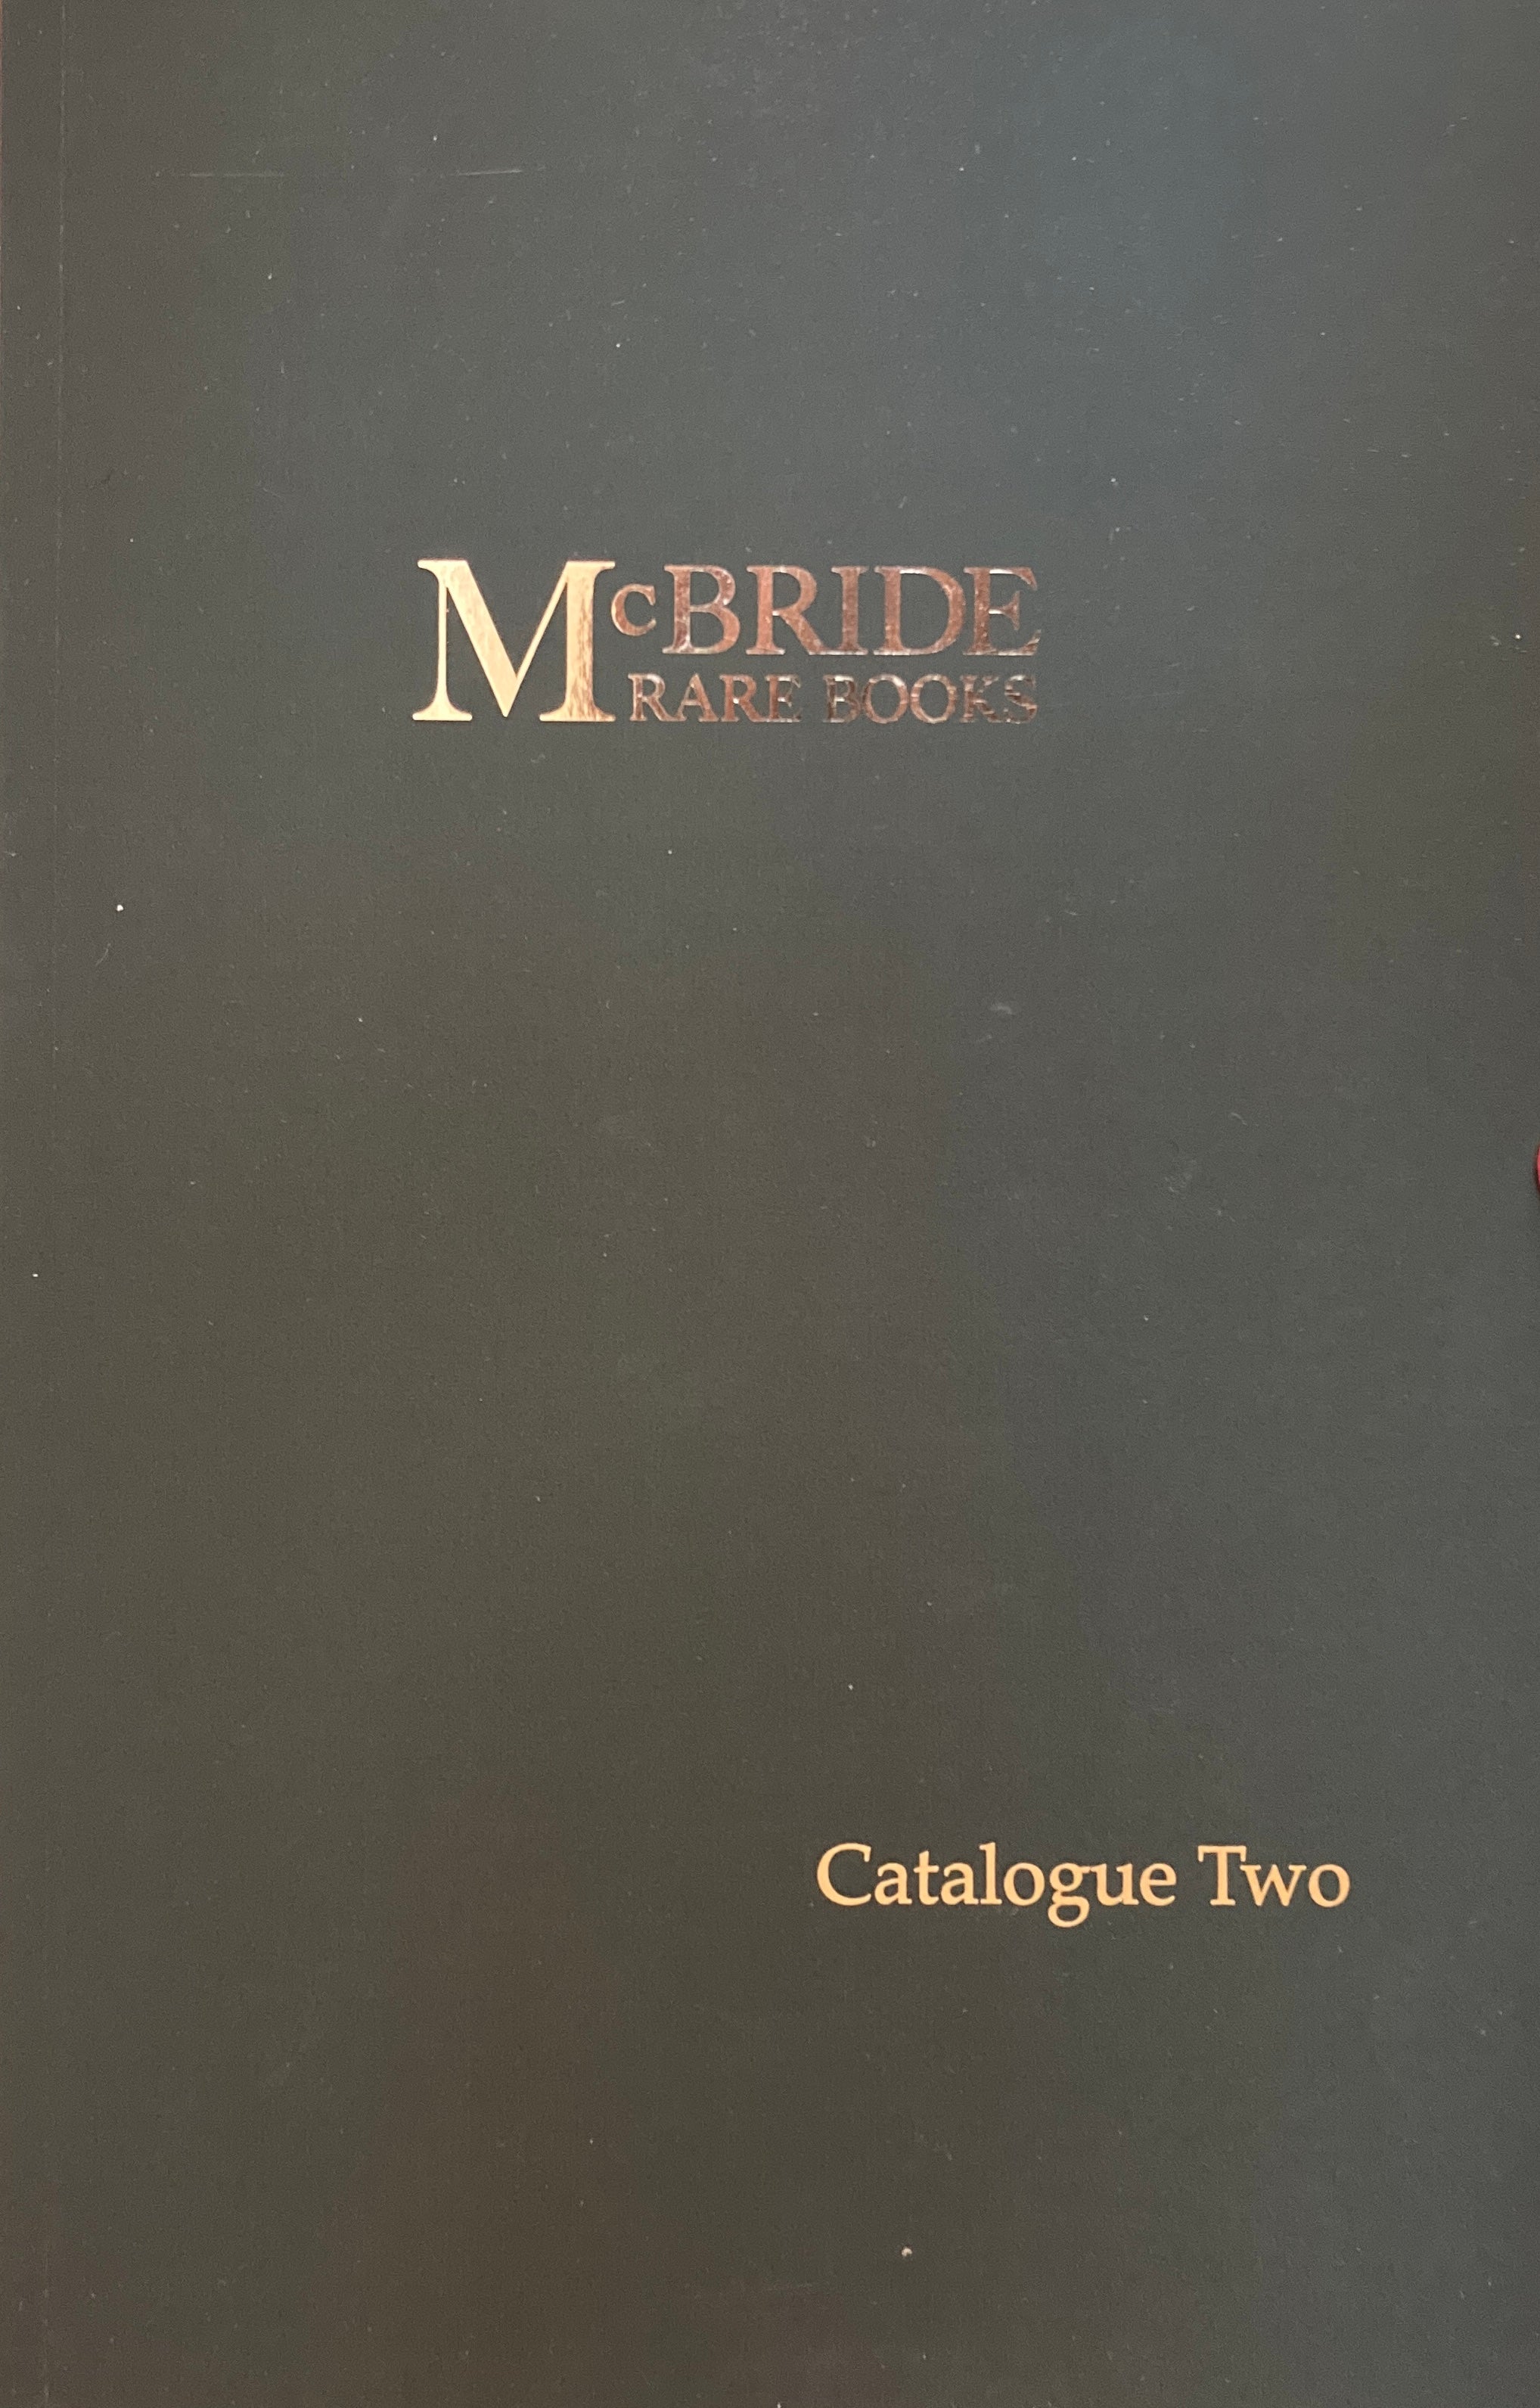 Catalogue Two